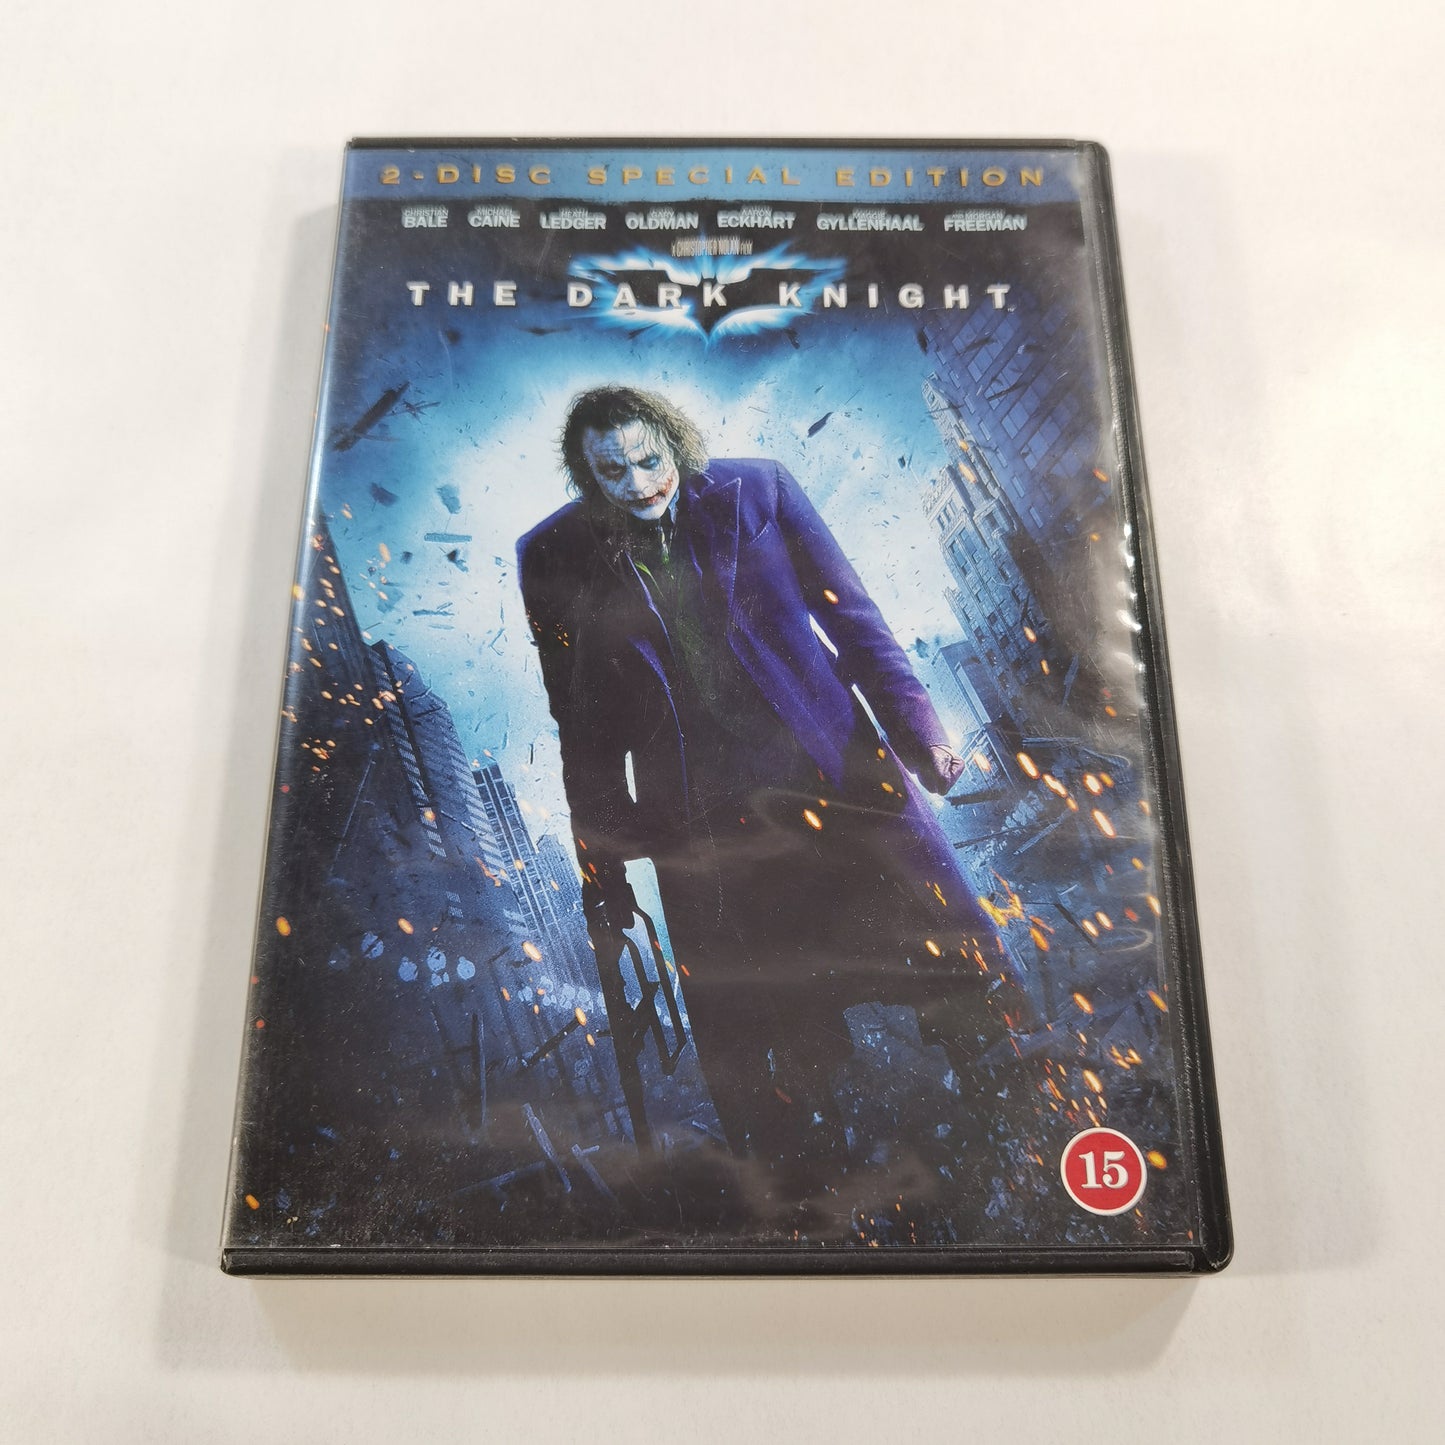 Batman: The Dark Knight (2008) - DVD DK 2008 2-Disc Special Edition